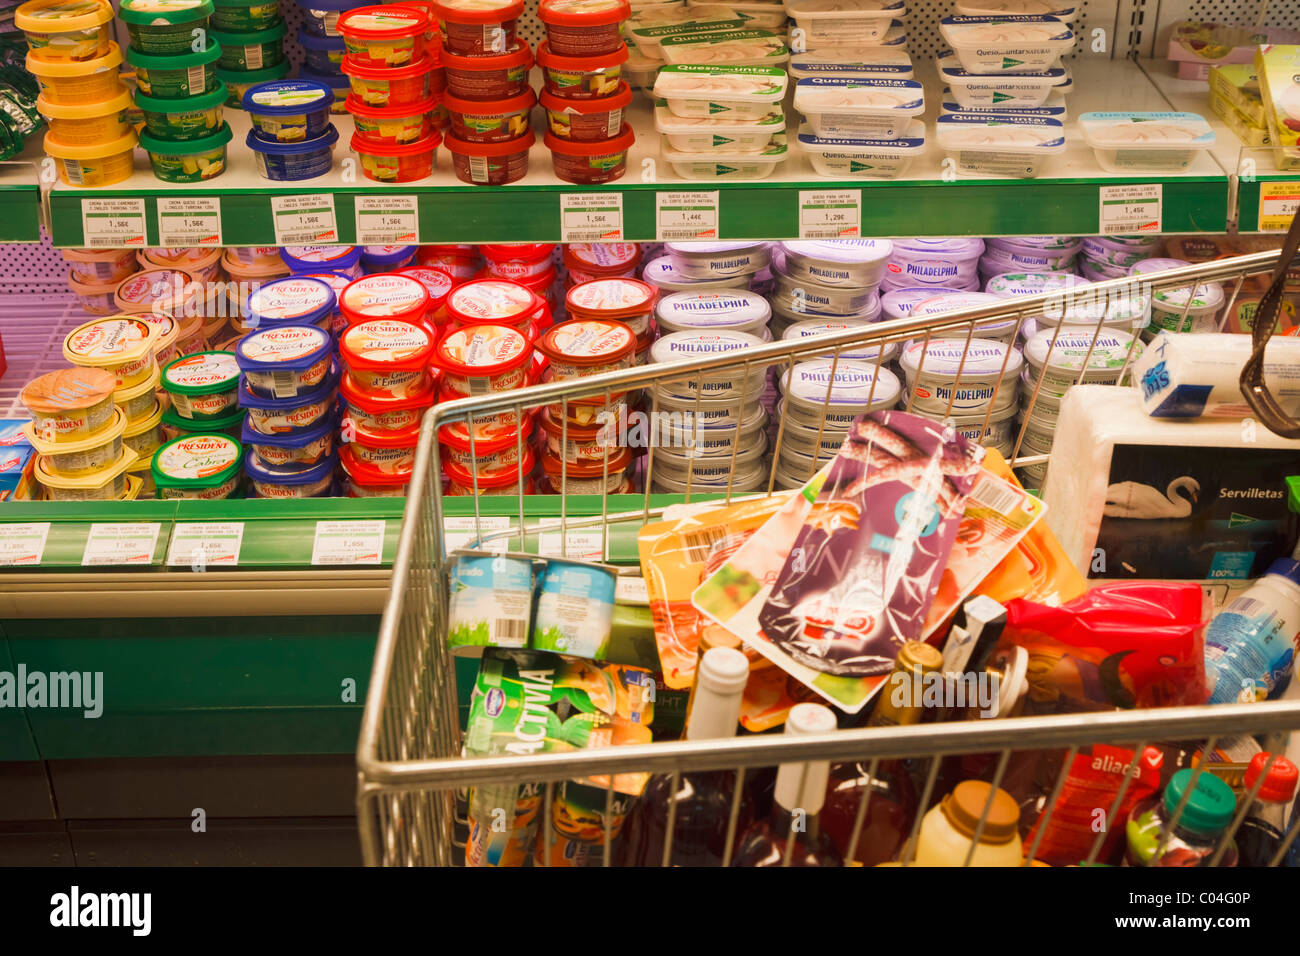 Einkaufswagen voller Lebensmittel in El Corte Ingles Supermarkt Supercor, Los Boliches, Provinz Malaga, Costa Del Sol, Spanien. Stockfoto